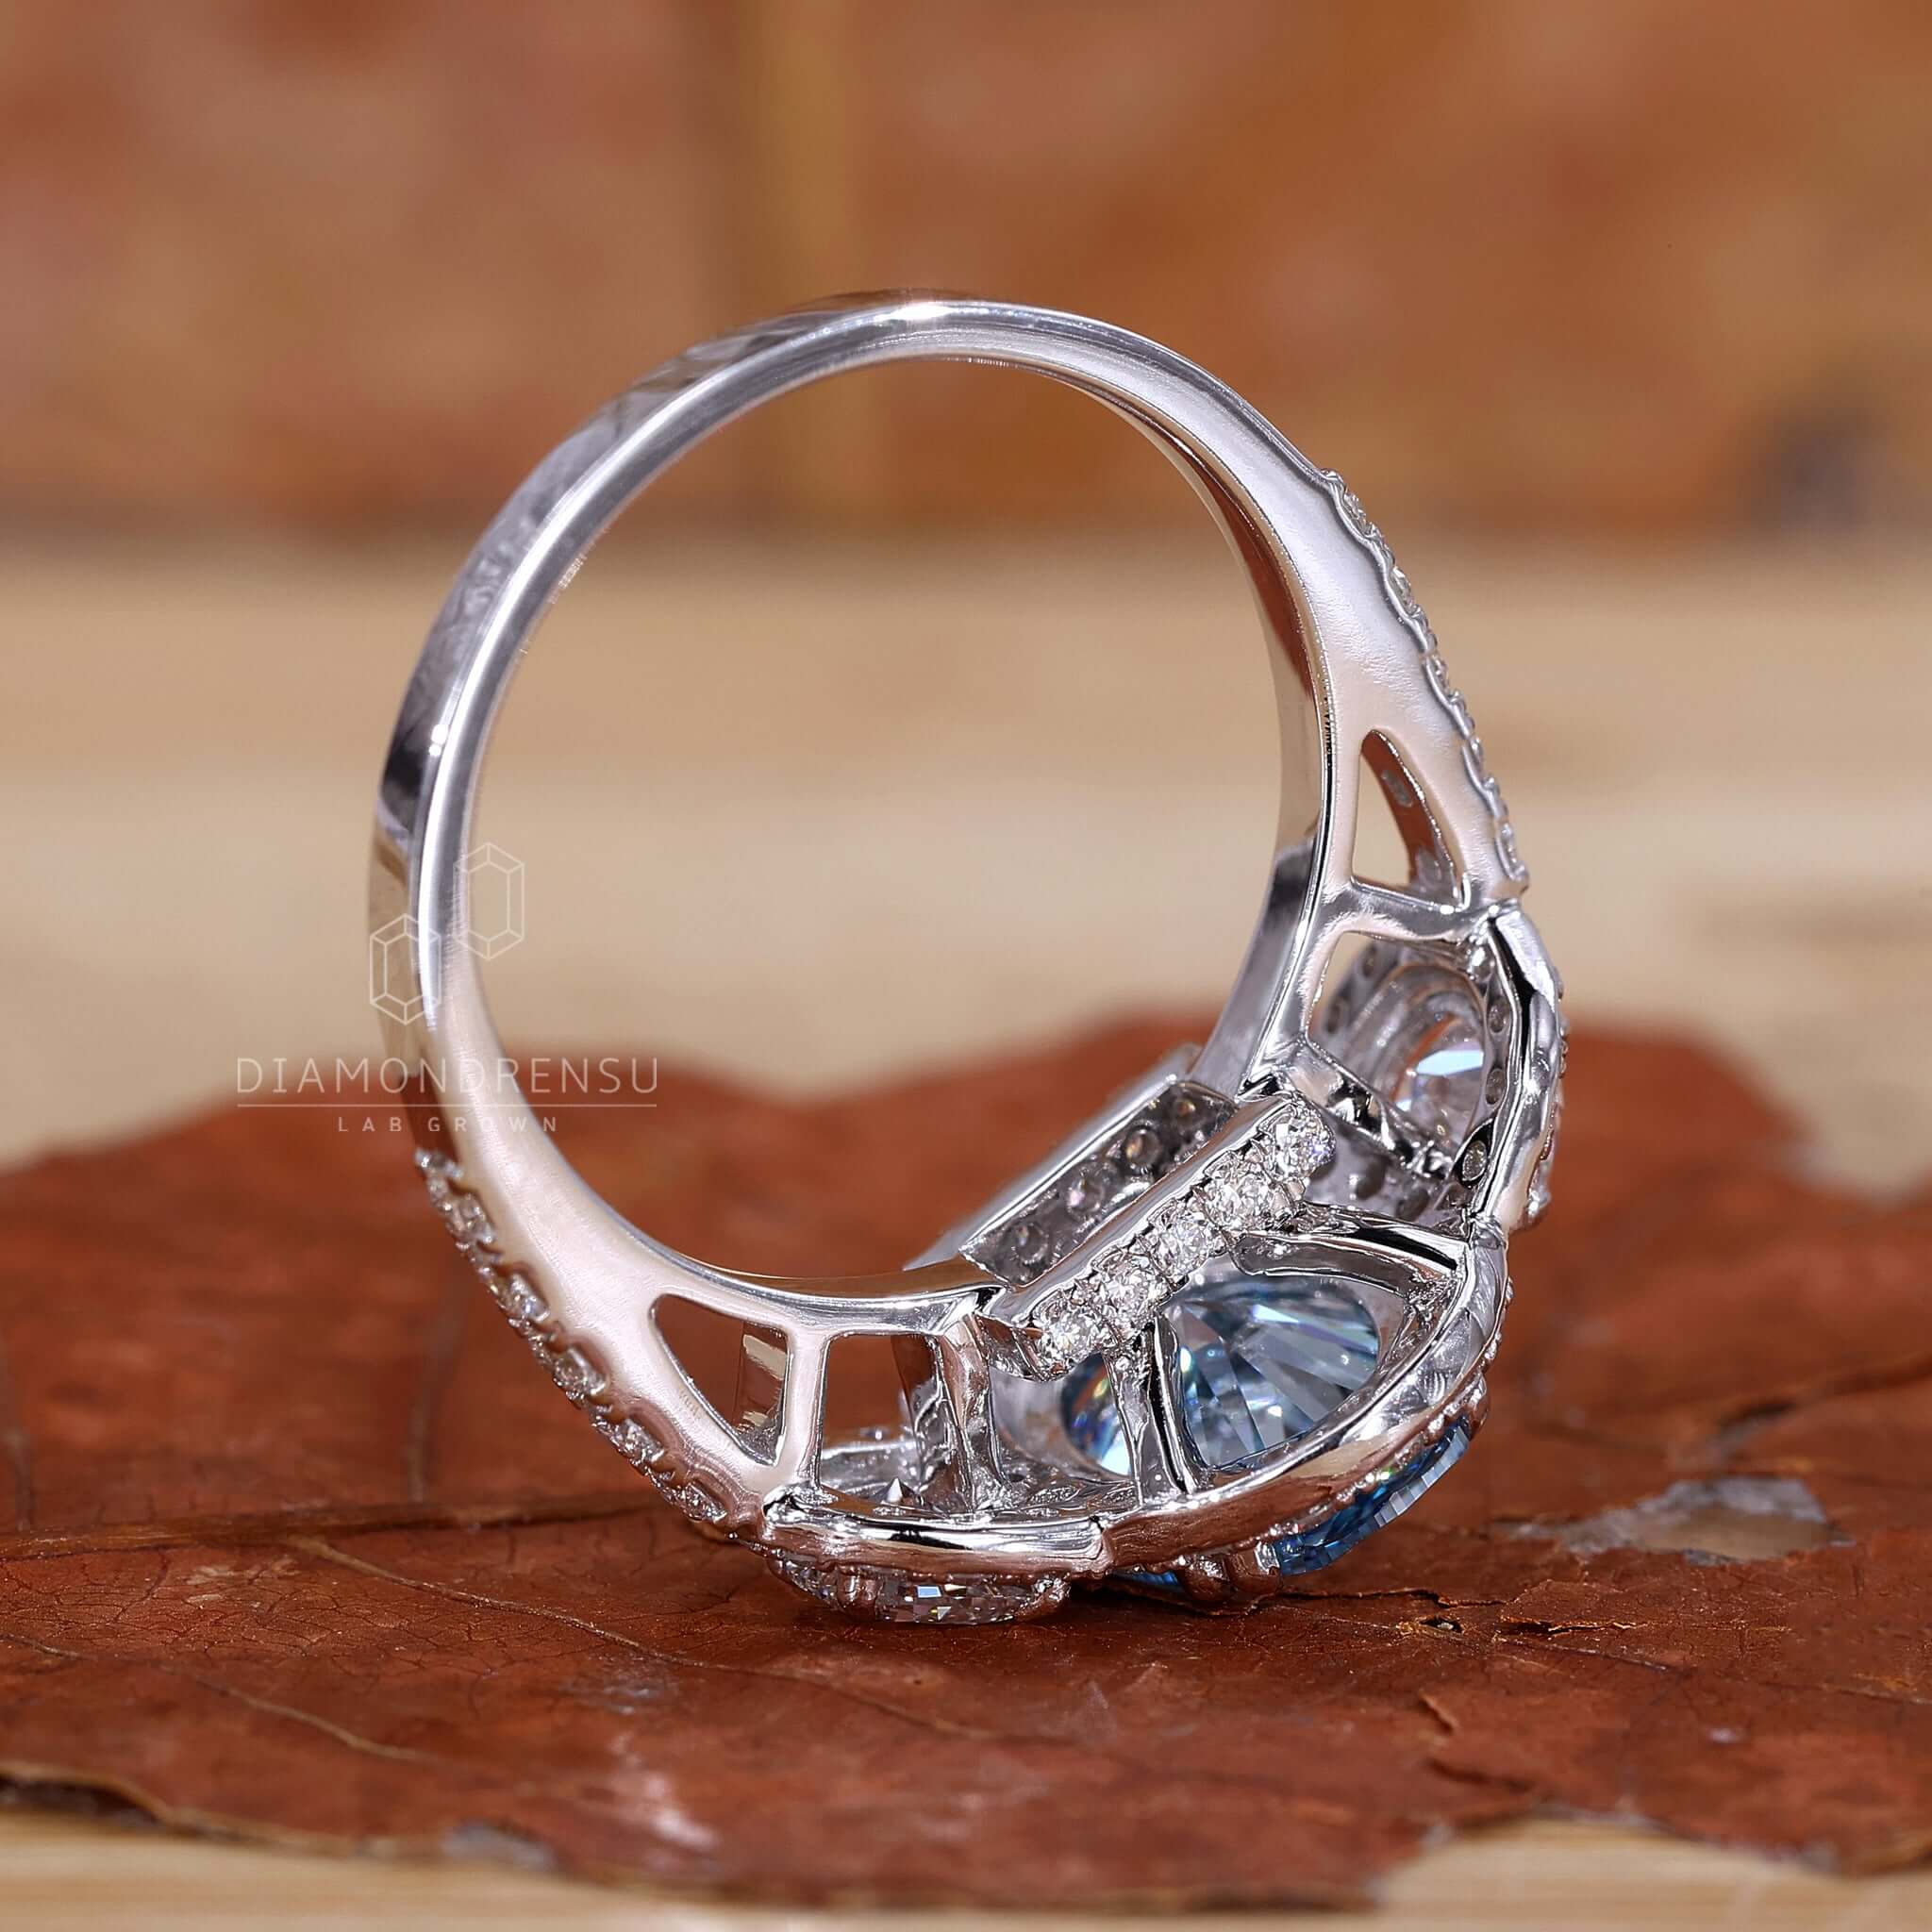 5 Carat Diamond Rings: Expert Buying Guide | MDR Atelier | Miss Diamond Ring